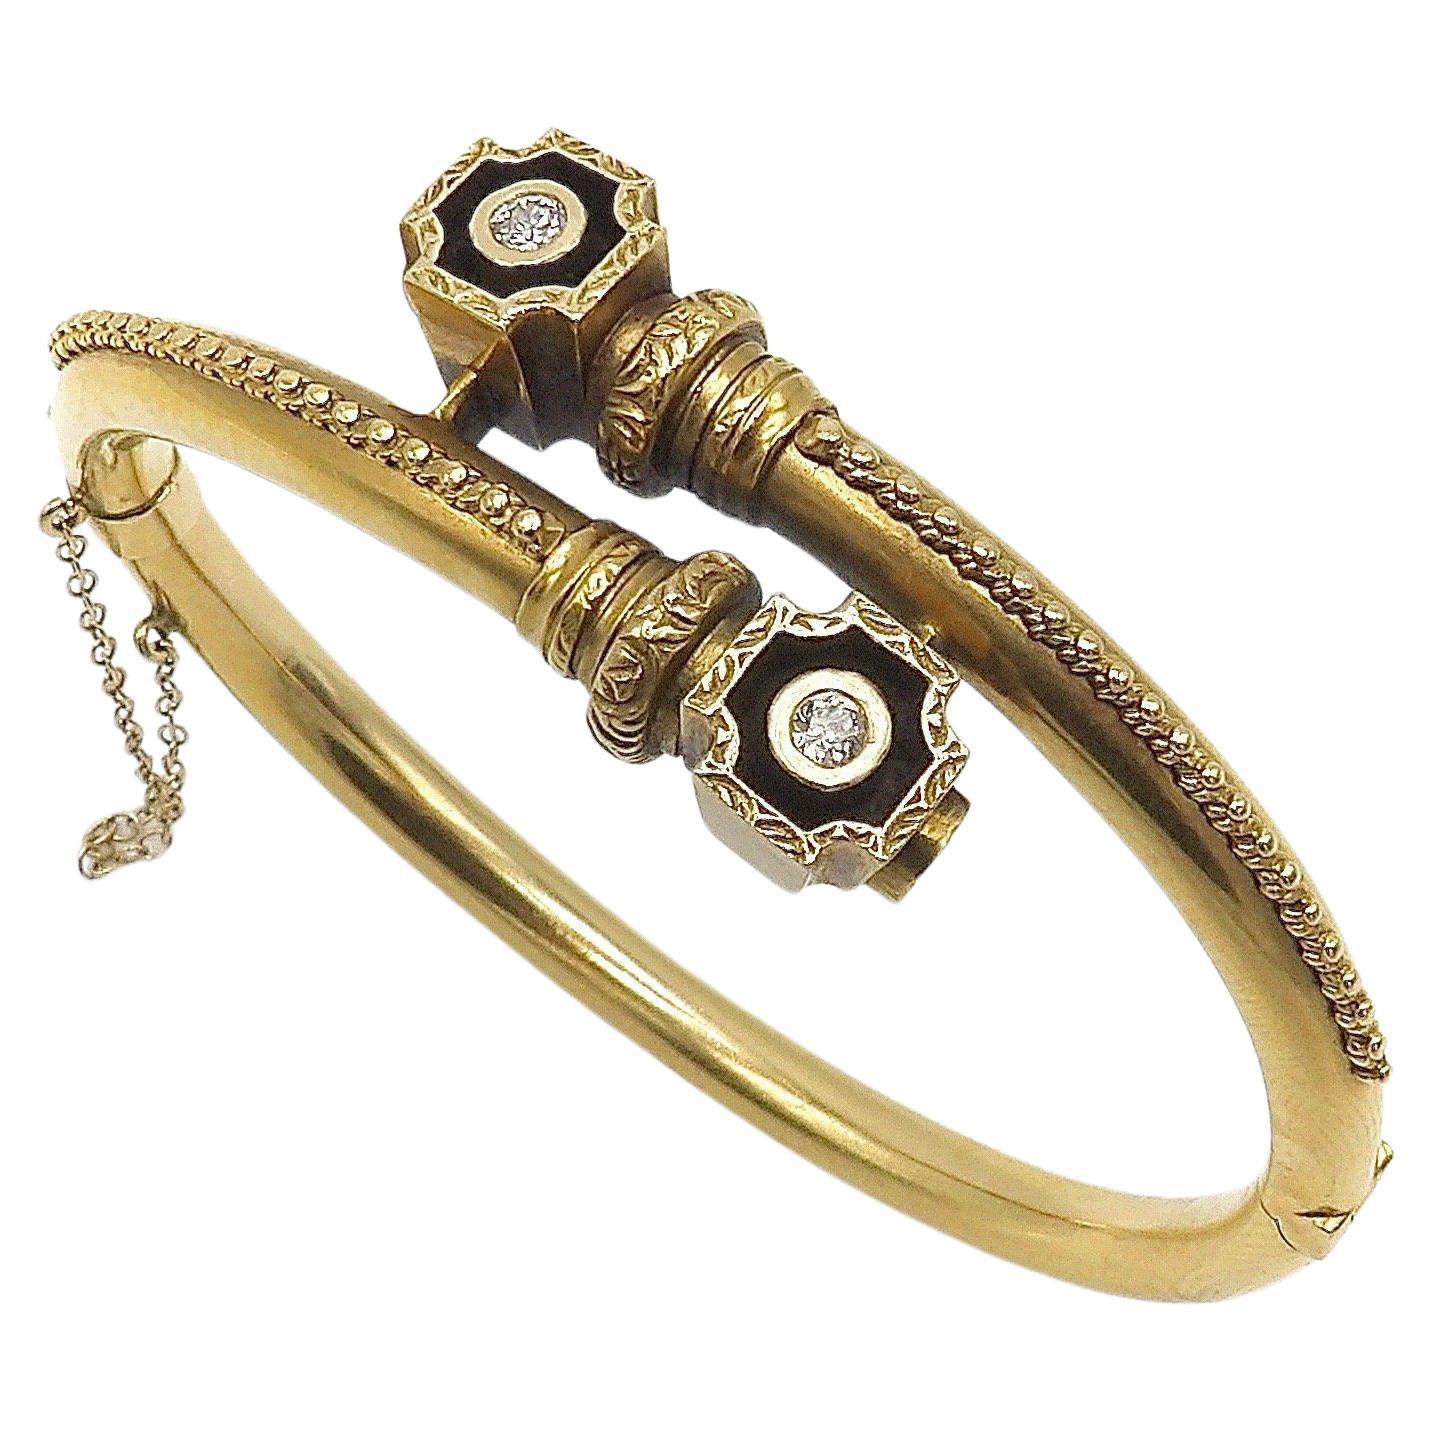 Etruscan Revival 14K Gold Bypass Bracelet with Diamonds